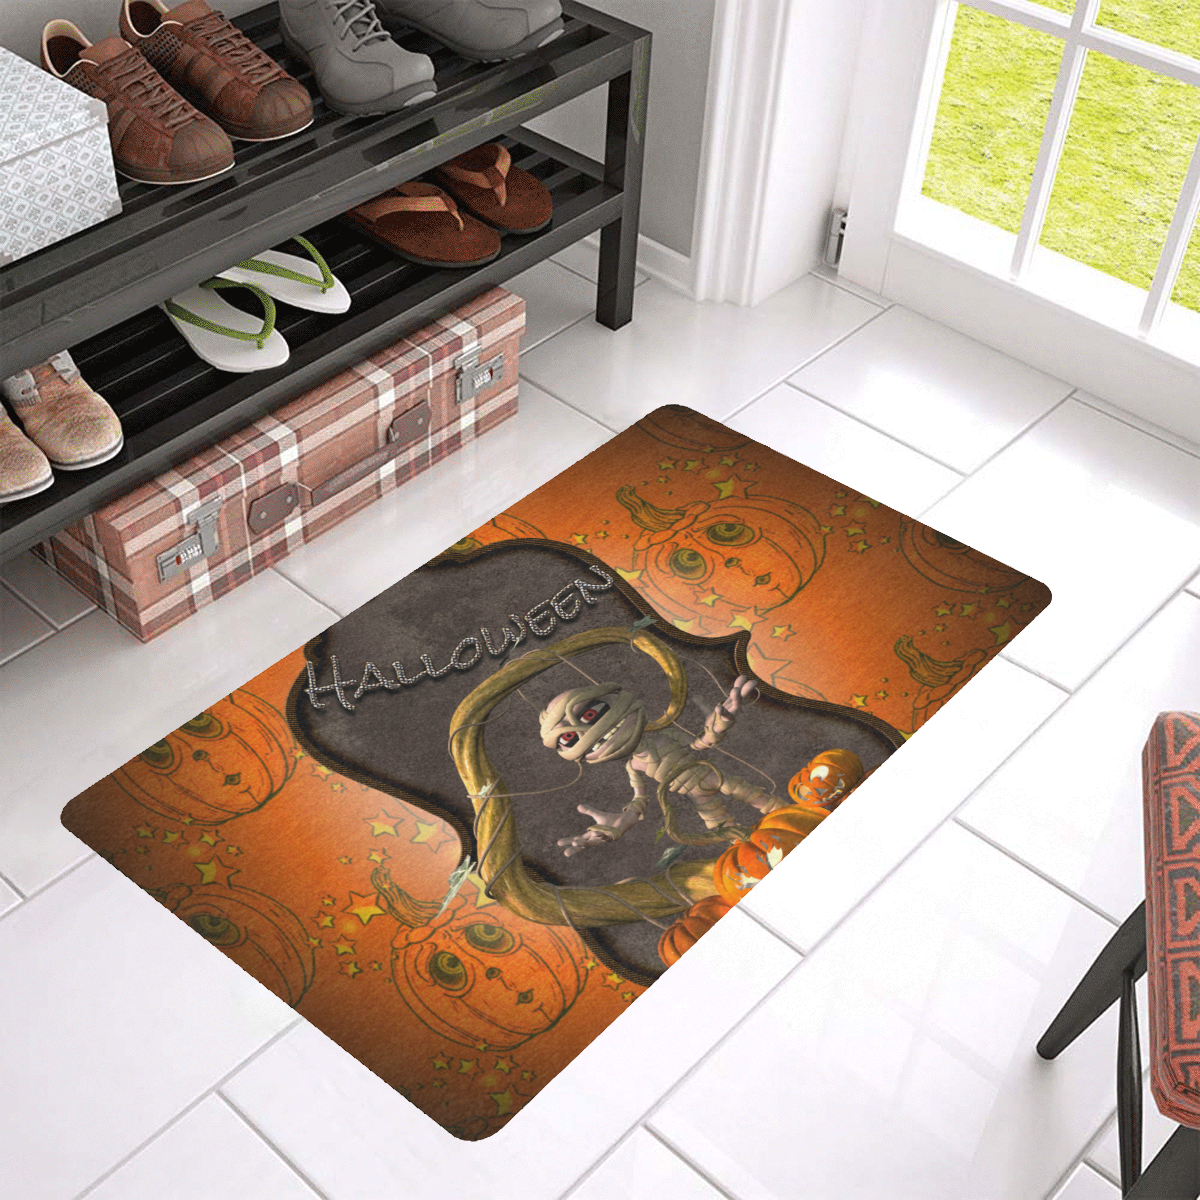 Halloween, funny mummy Doormat 30"x18" (Black Base)